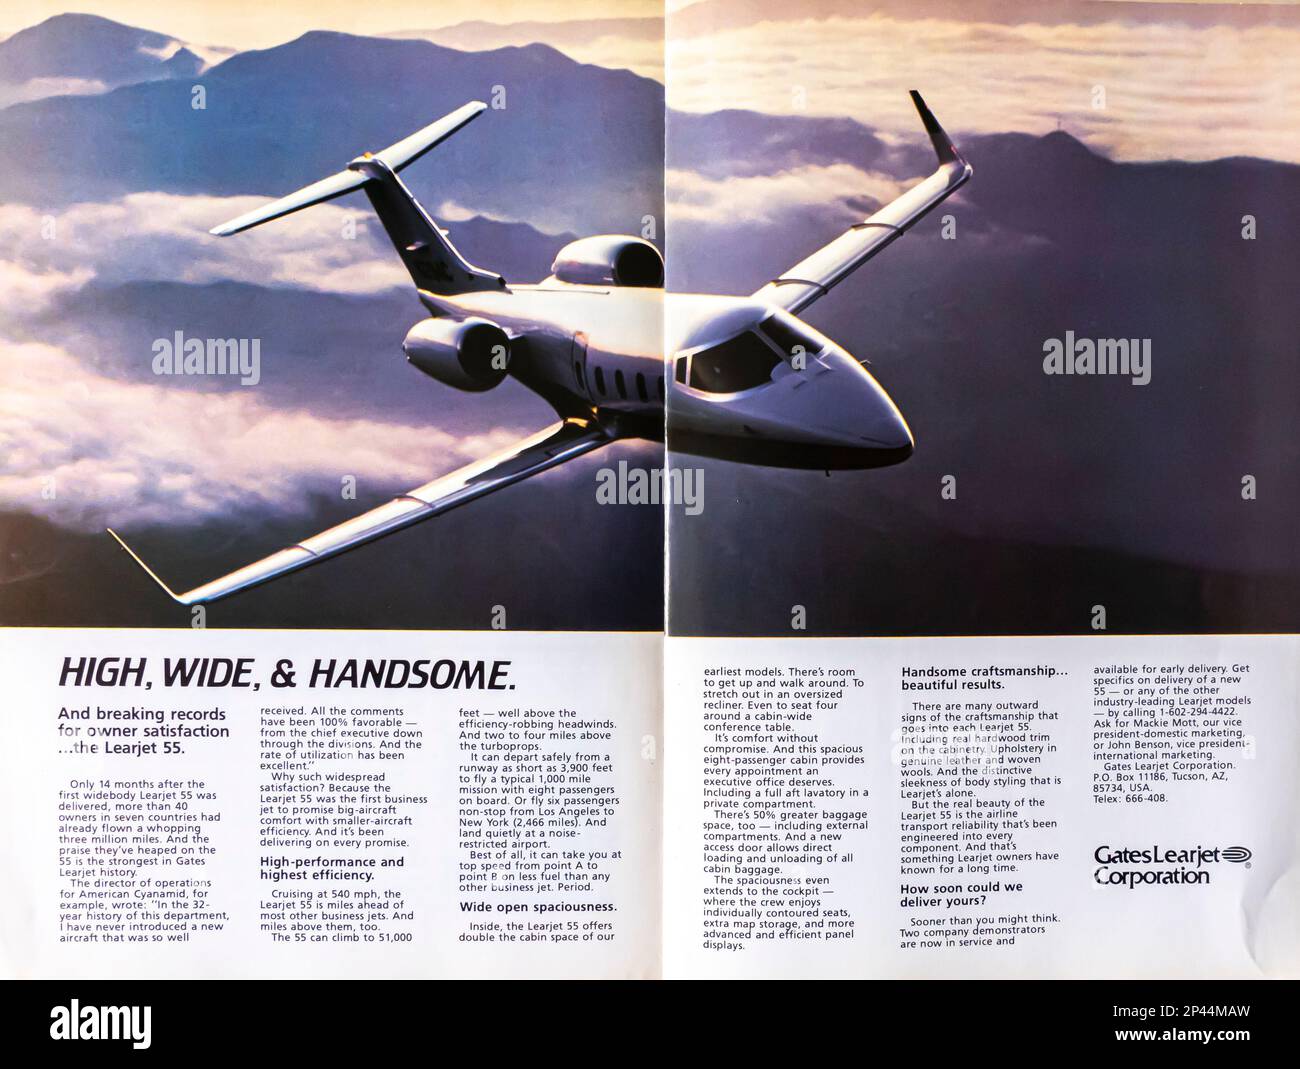 Gates Learjet Corporation advert in a Natgeo magazine october 1982 Stock Photo